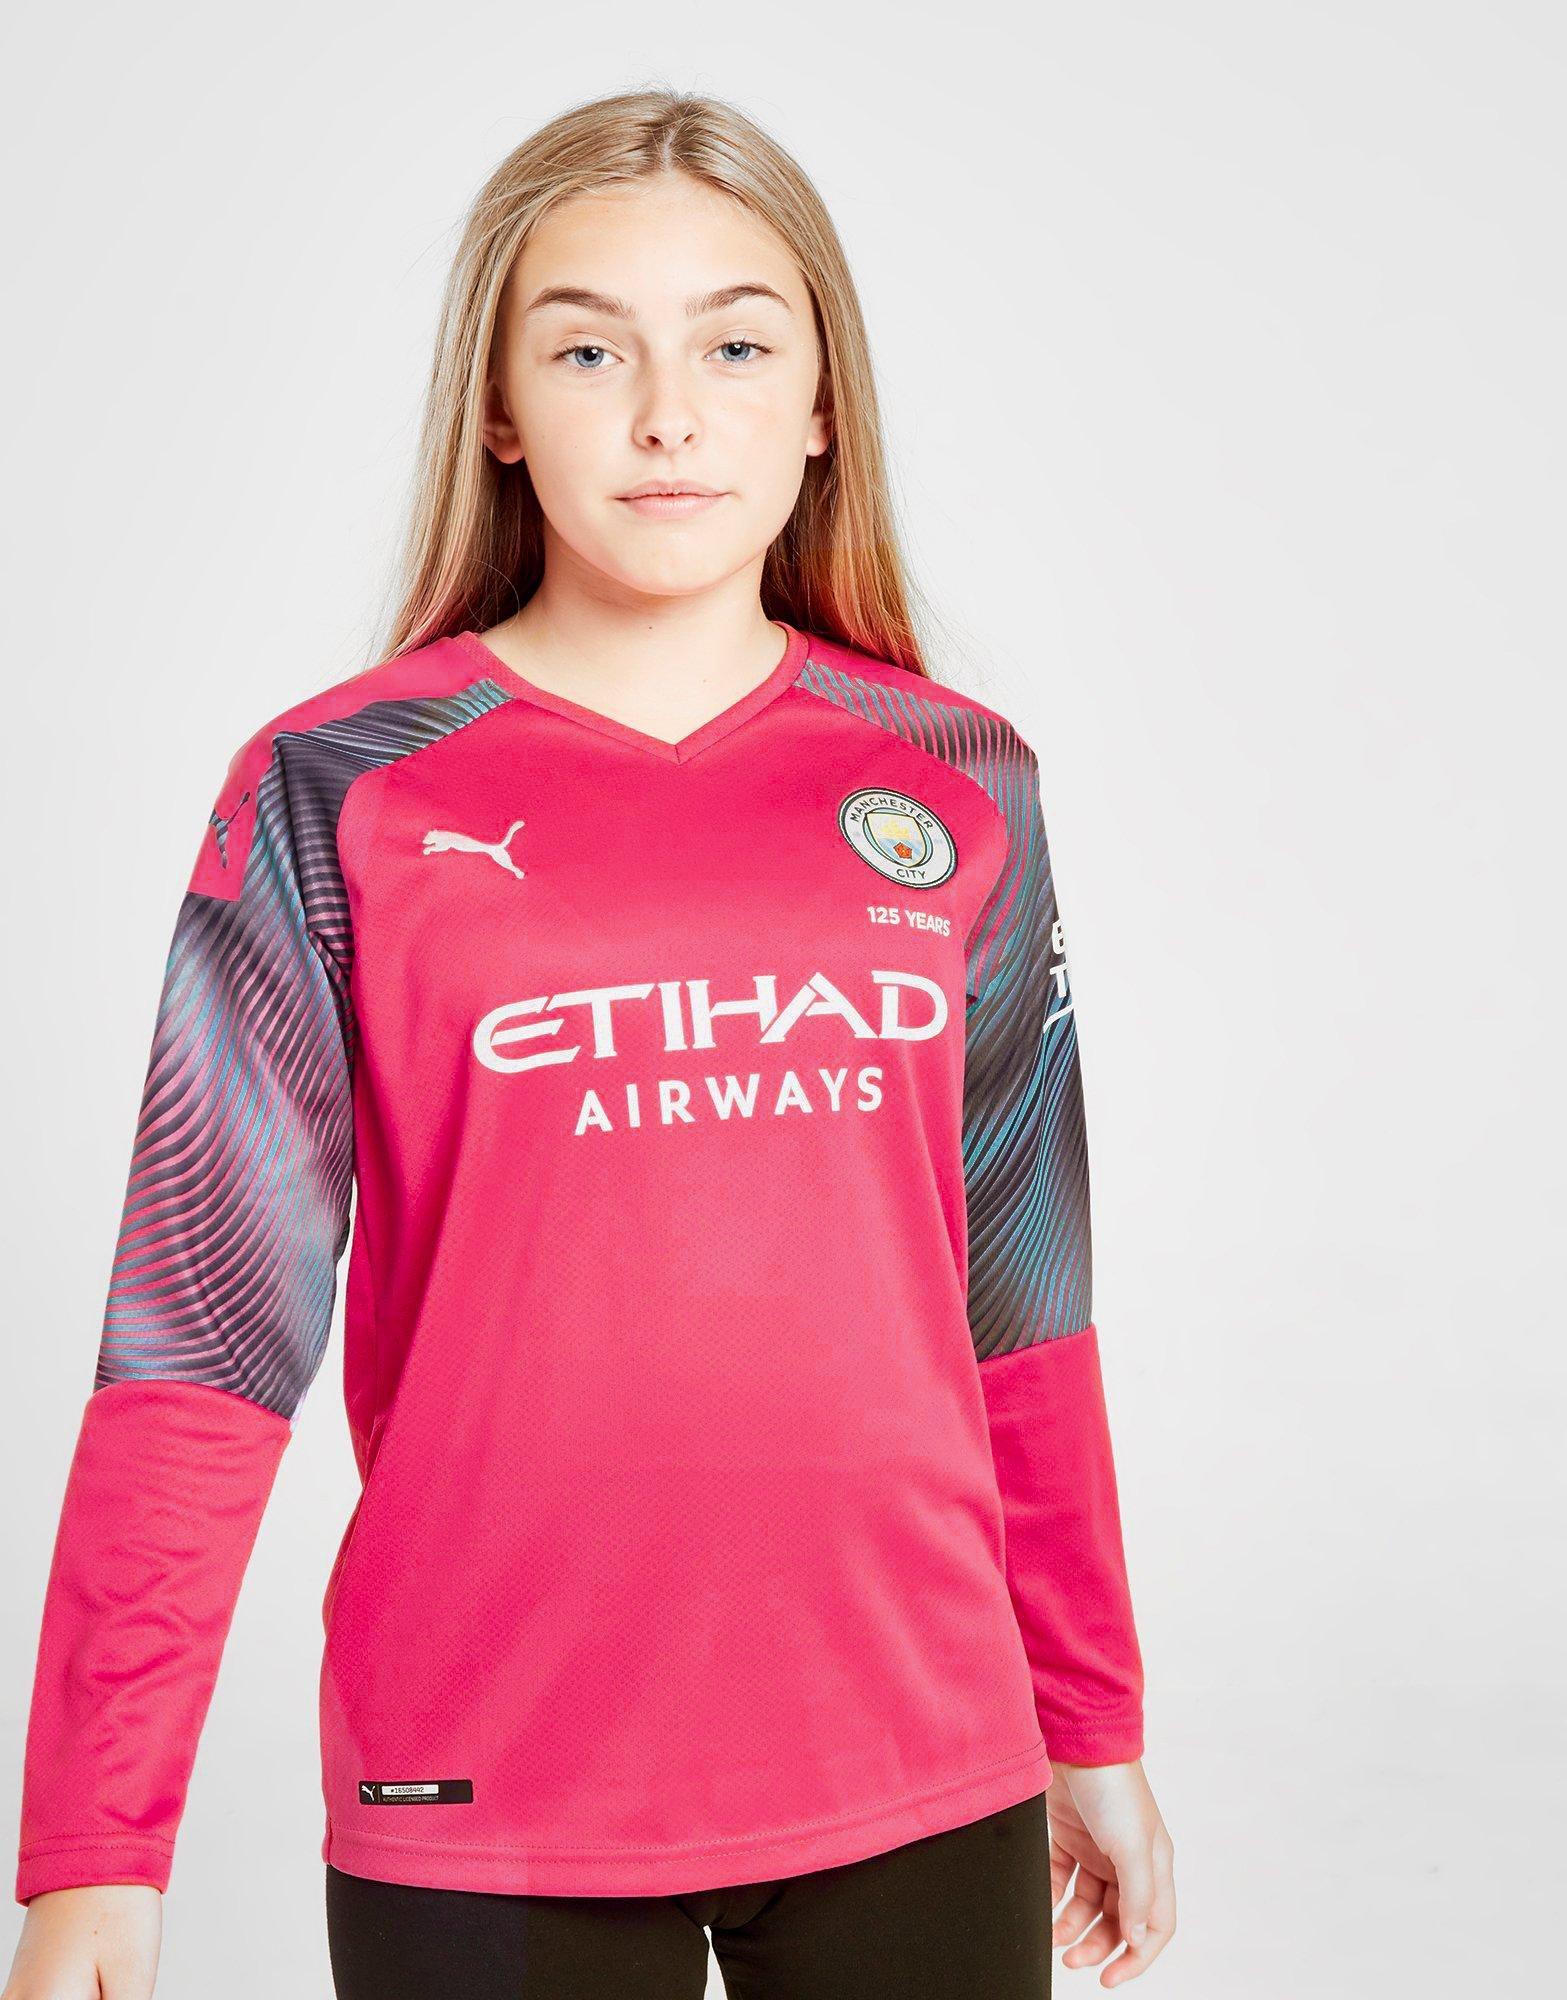 Man City Goalkeeper Kit Junior Jersey On Sale